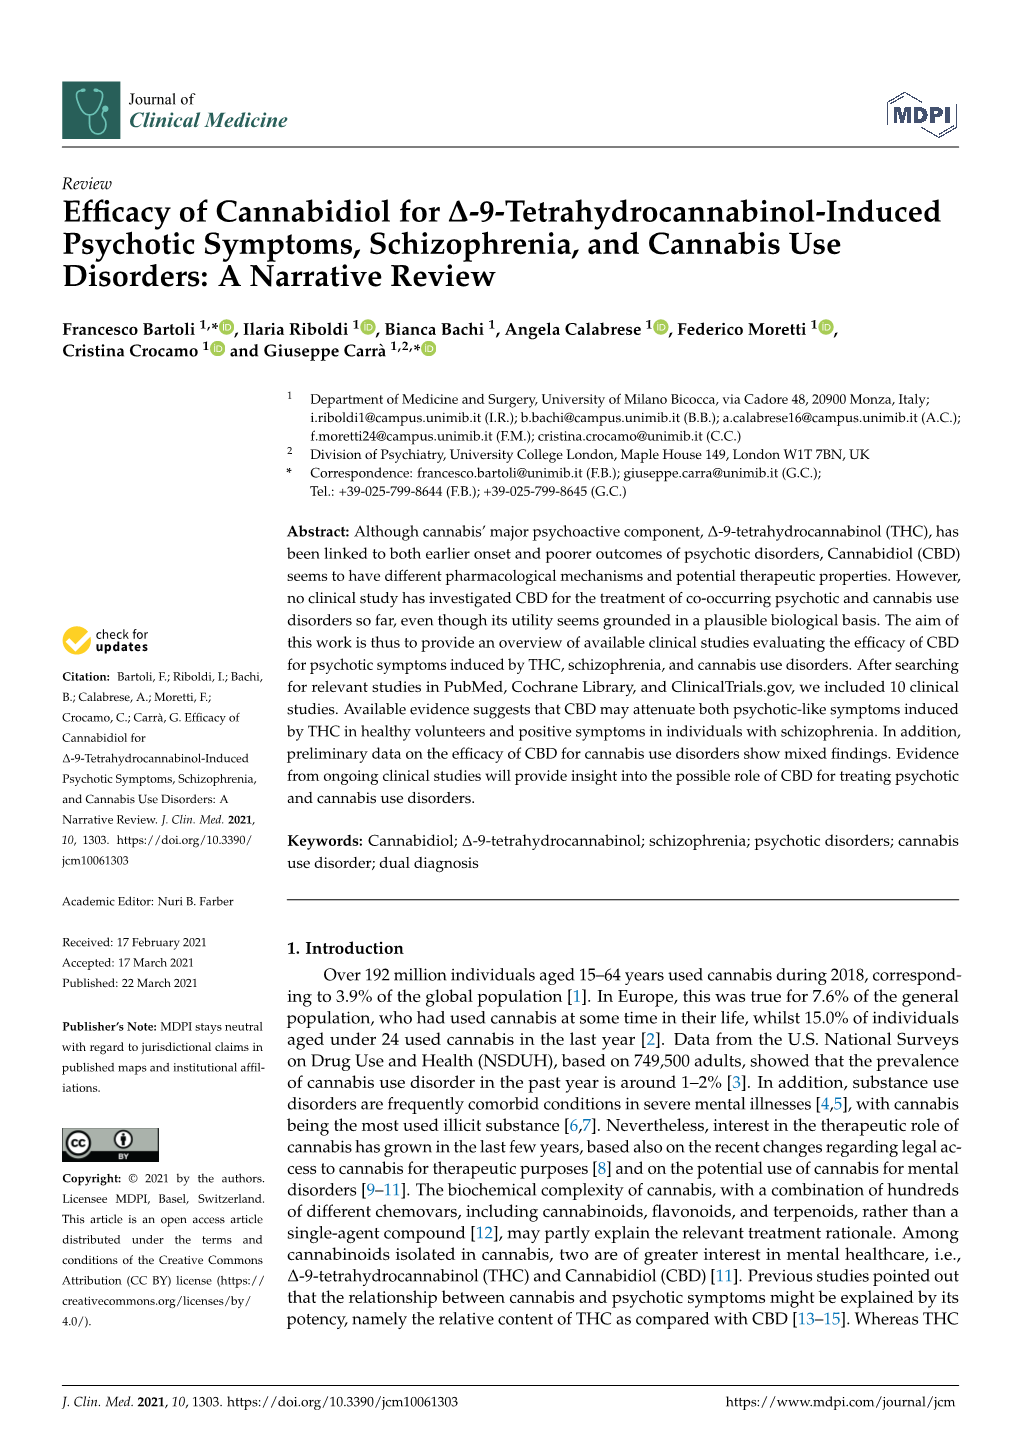 9-Tetrahydrocannabinol-Induced Psychotic Symptoms, Schizophrenia, and Cannabis Use Disorders: a Narrative Review